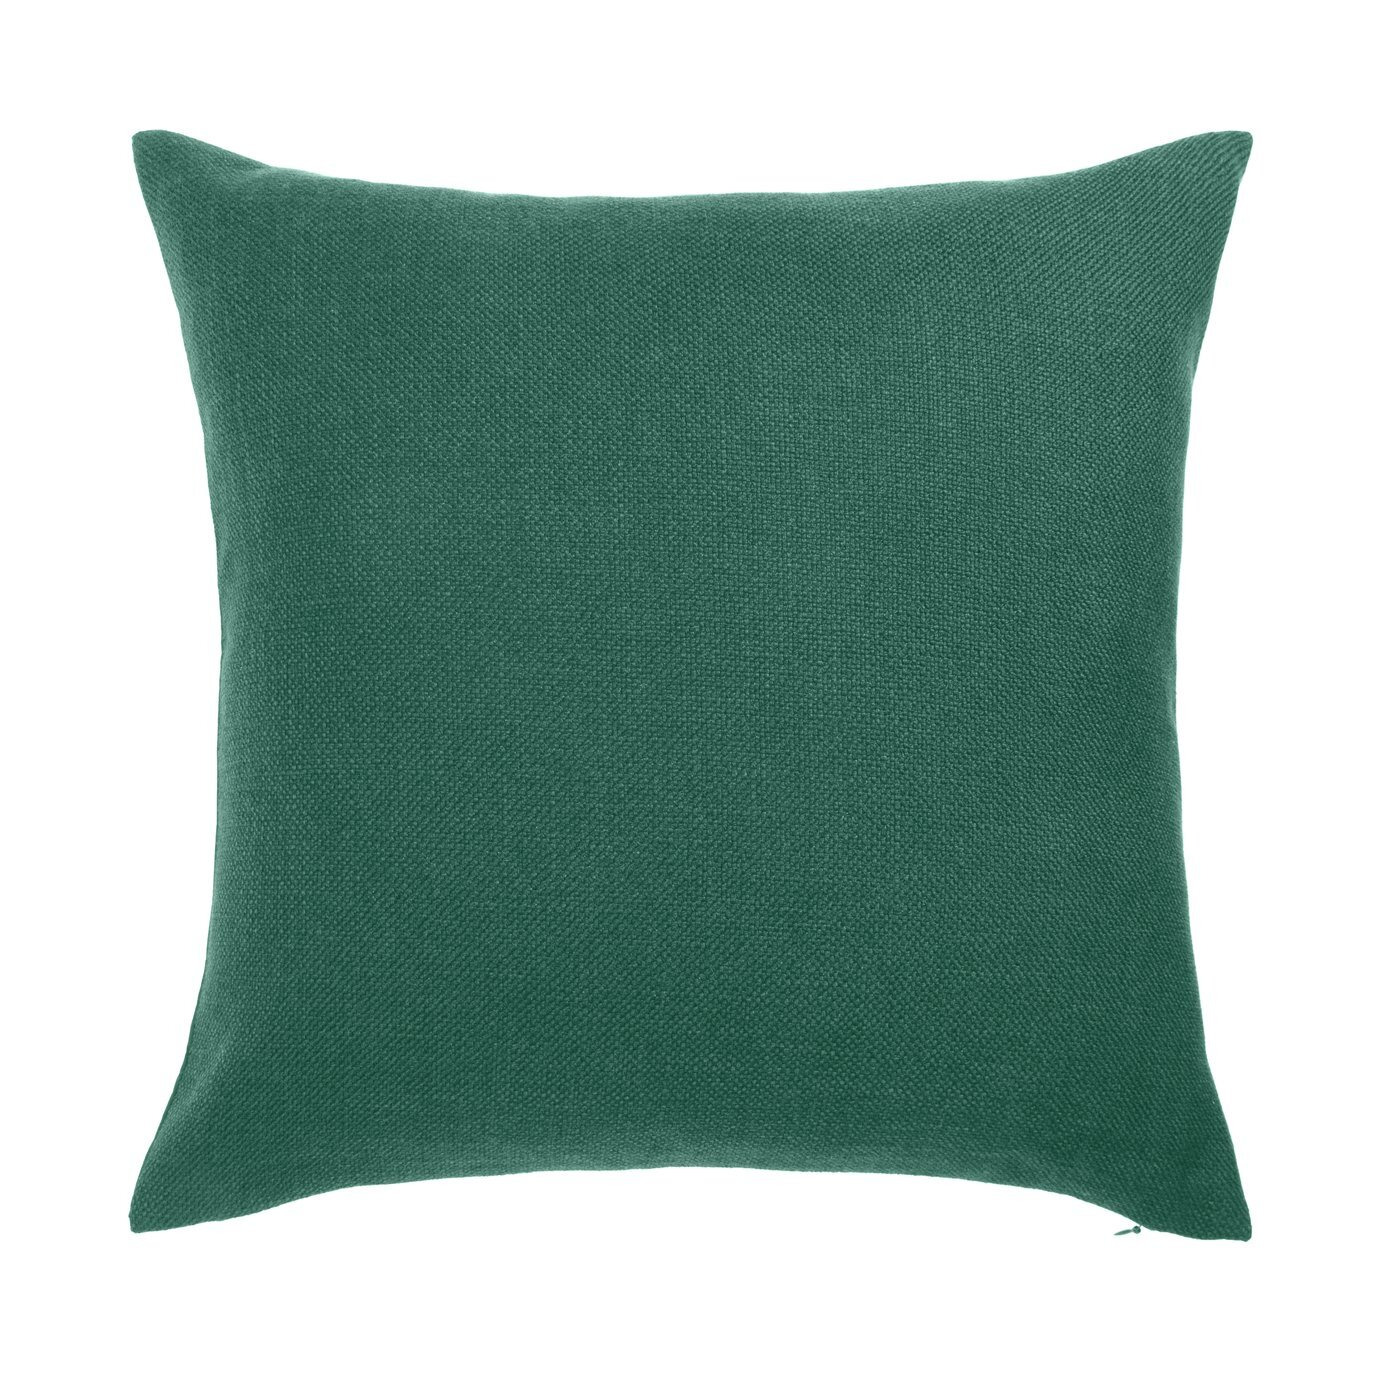 Habitat Basket Weave Cushion Cover - 2 Pack - Emerald - image 1